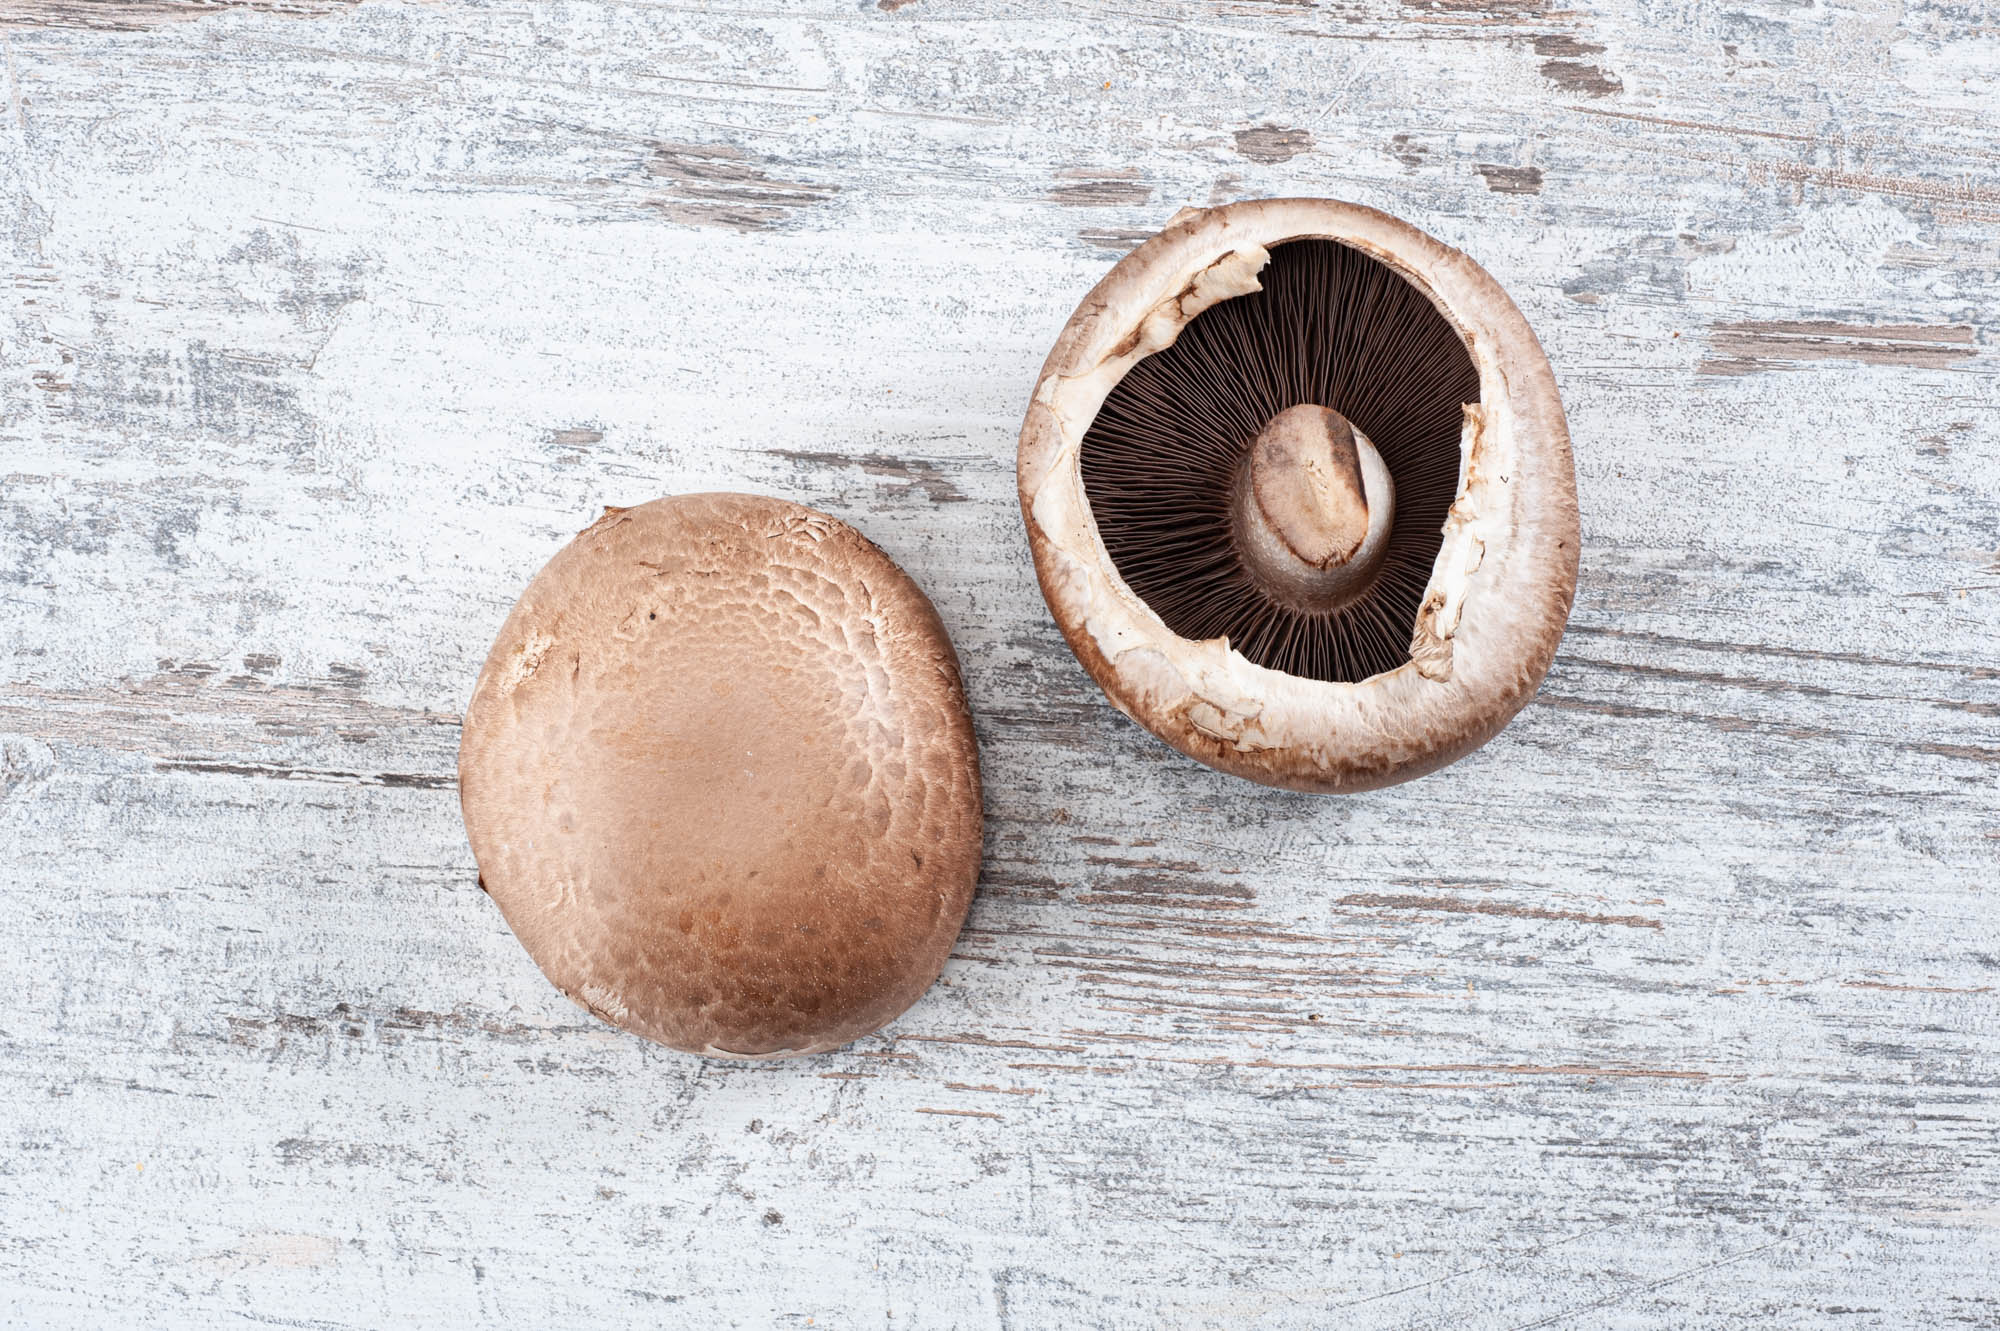 Portabello mushroom